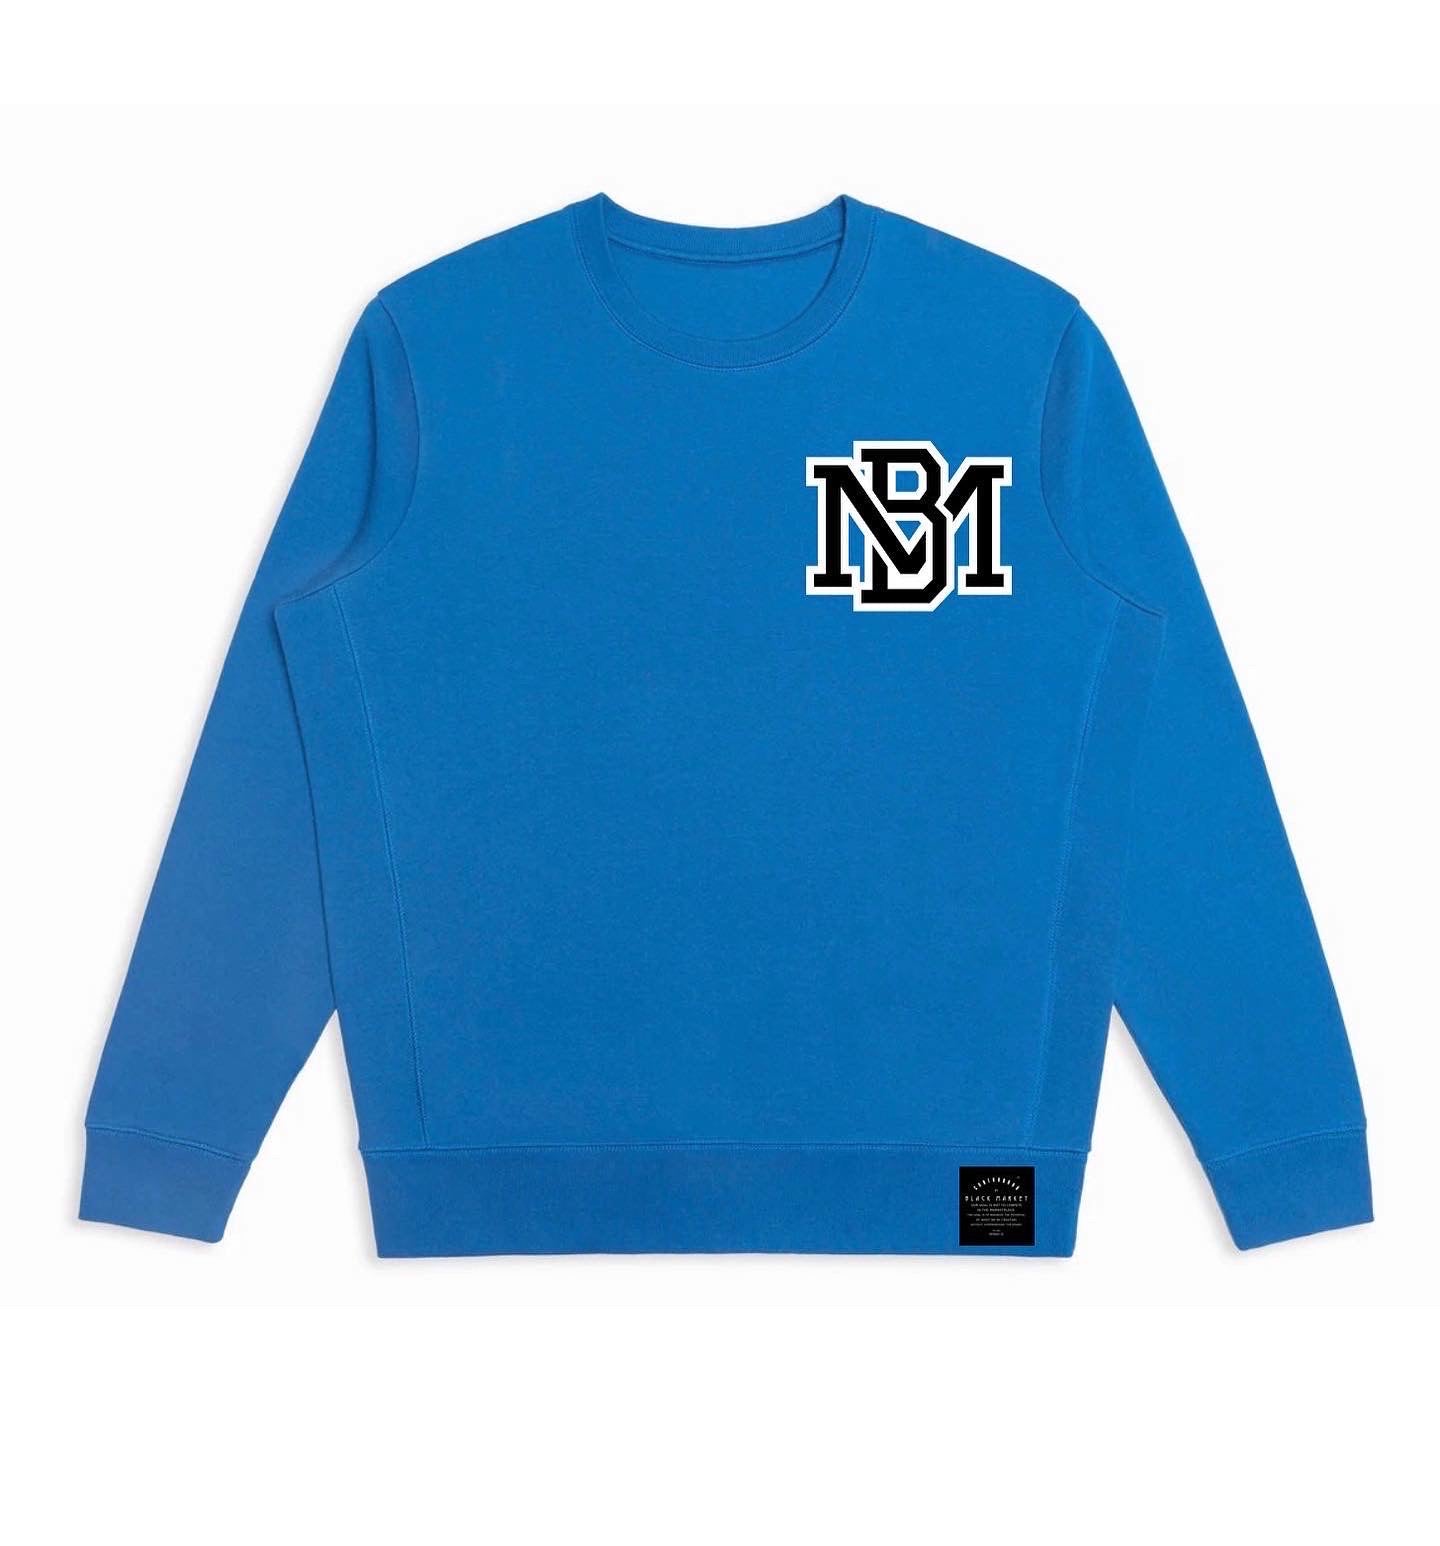 Heavyweight Crewneck Sweatshirt with heat transferred logo  [NY090-862/GRN-NAVY]